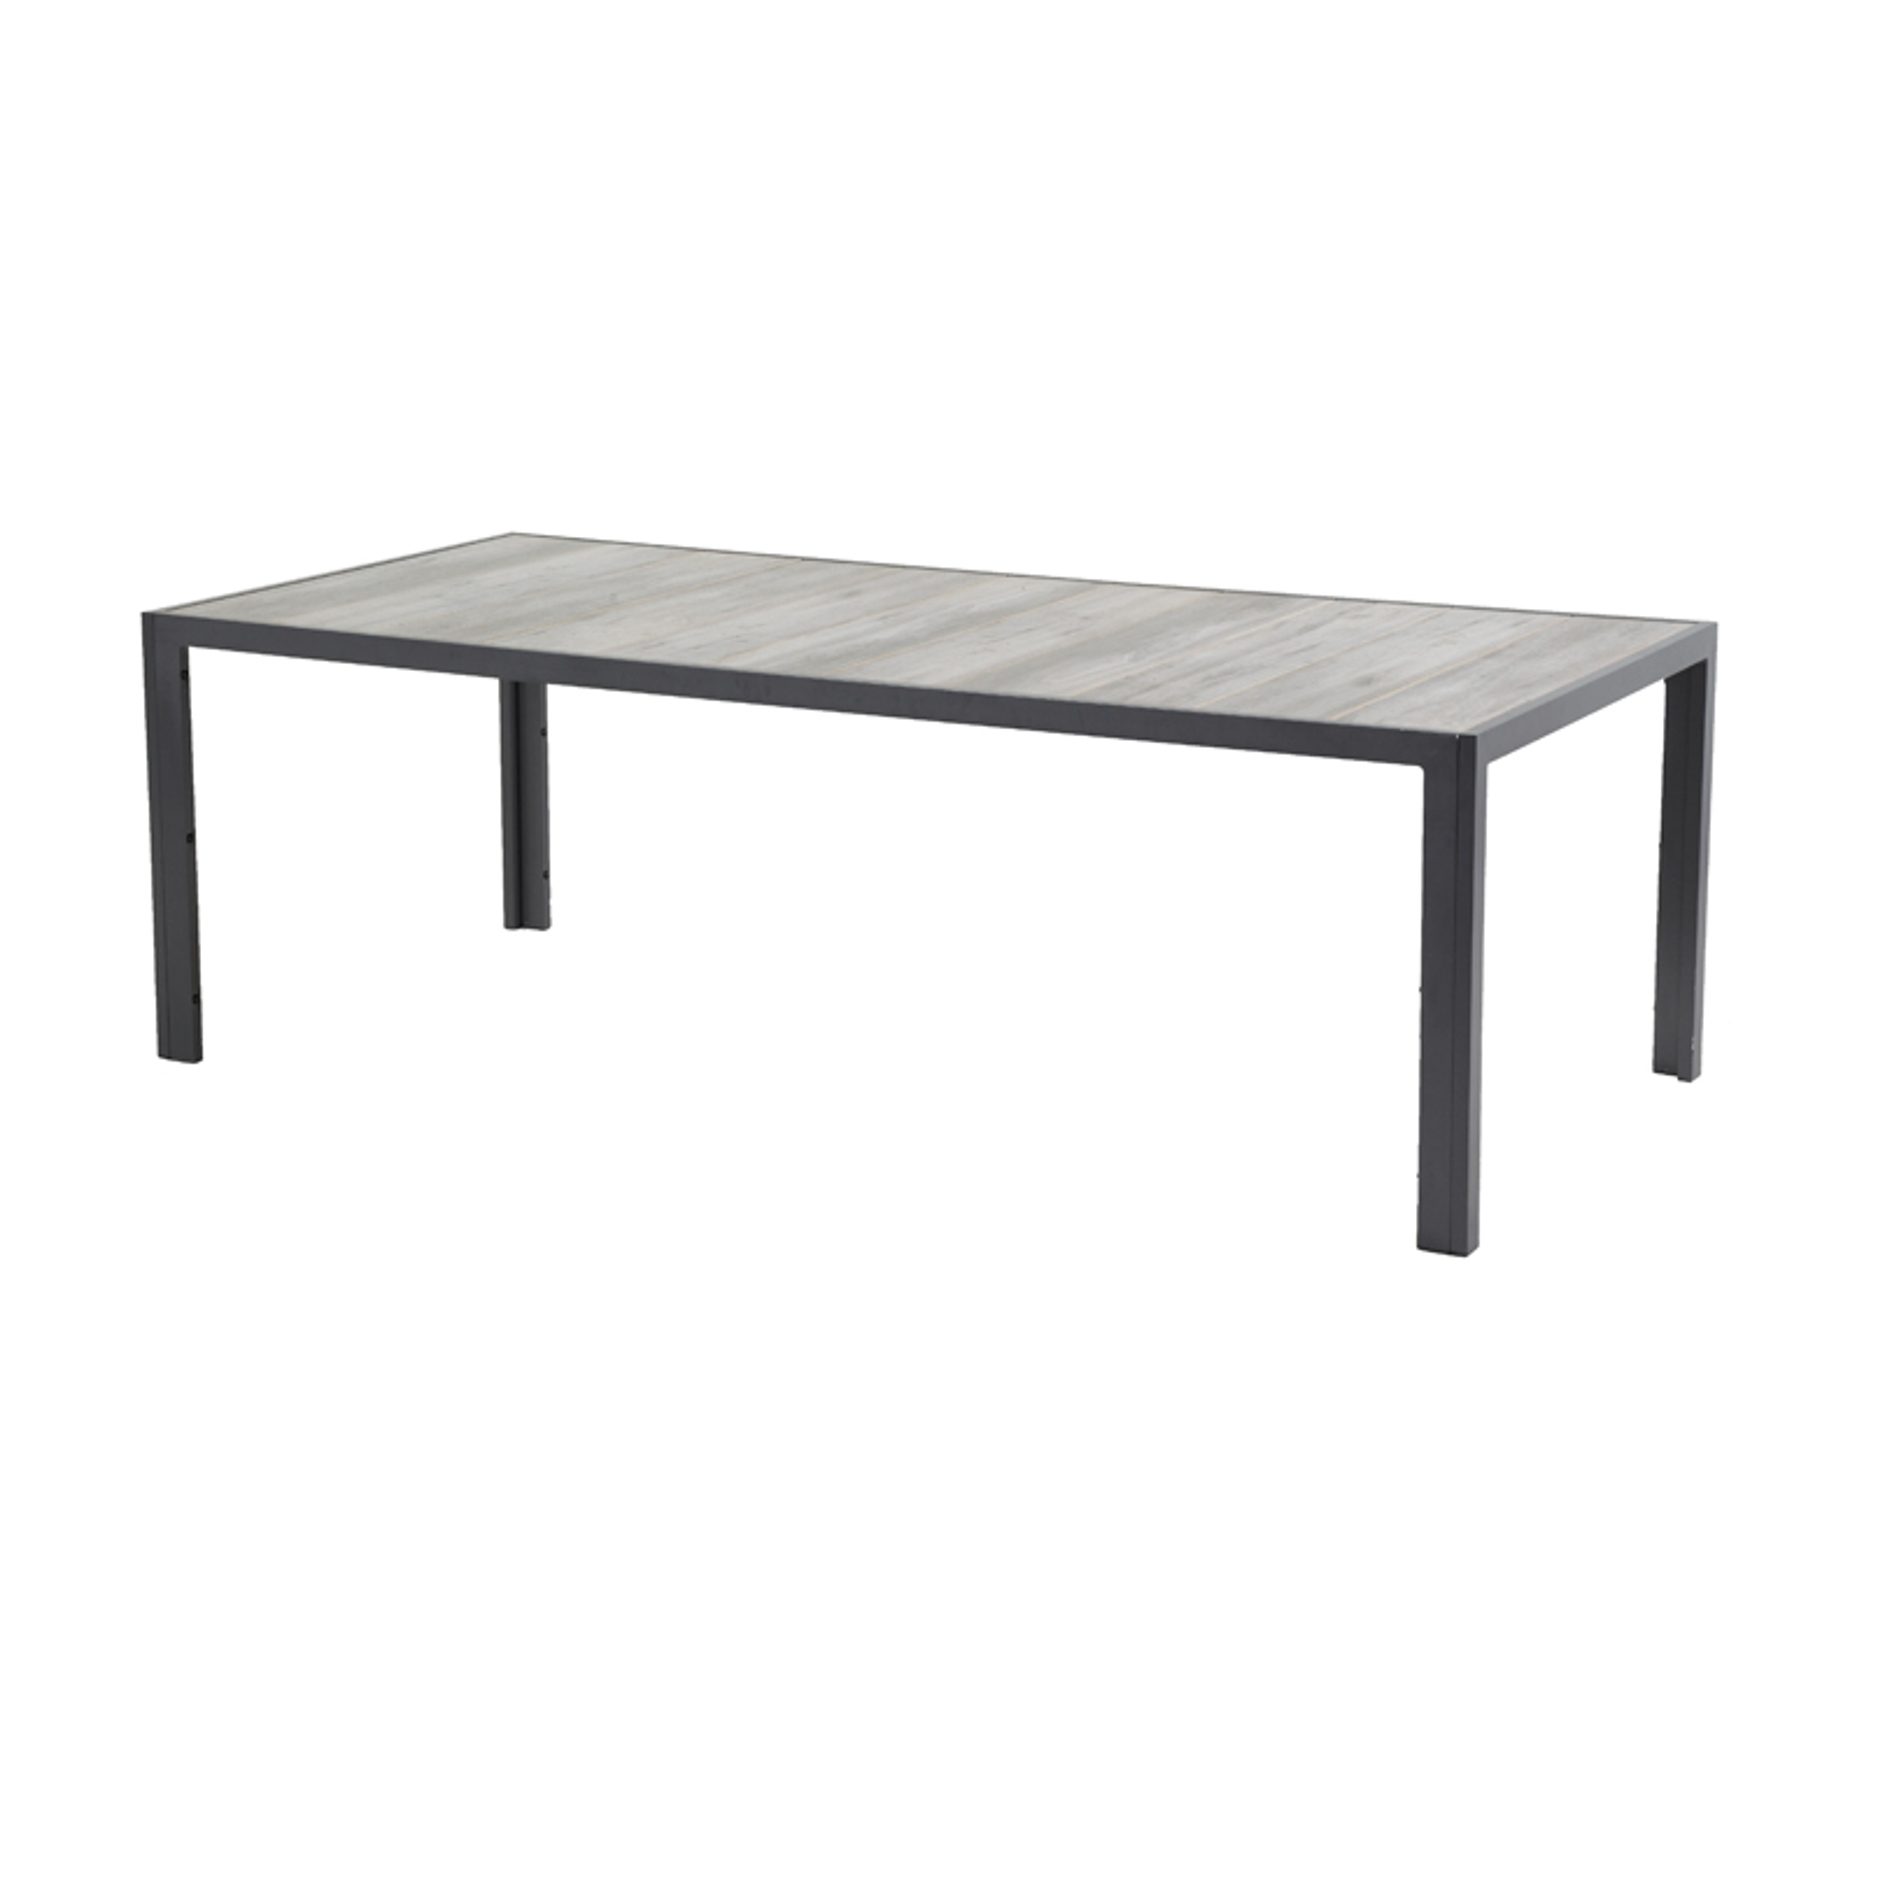 Hartman "Tanger" Gartentisch 228 x 105 cm, Gestell Aluminium xerix, Tischplatte aus Keramikfliesen in grauer Holzoptik